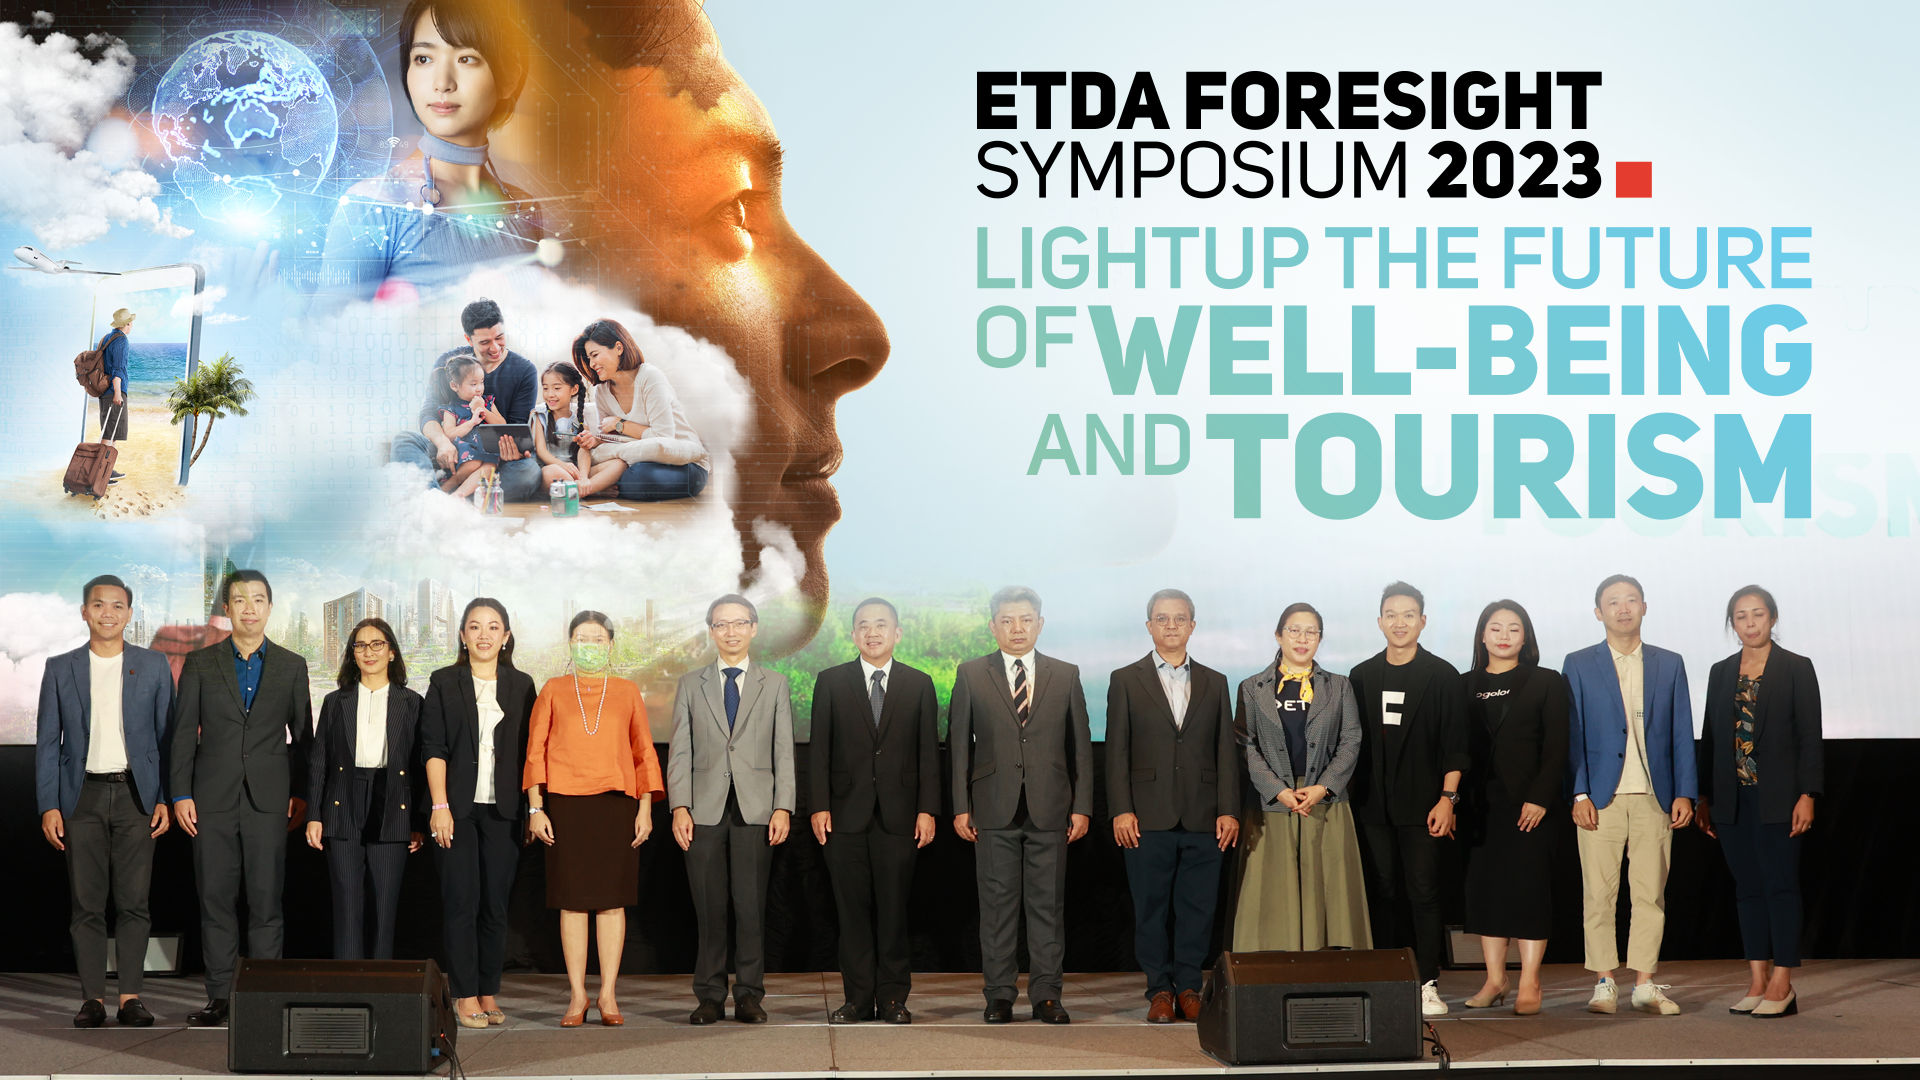 ETDA จัดใหญ่ ETDA Foresight Symposium 2023 เปิดภาพอนาคตดิจิทัล “สุขภาวะและท่องเที่ยวไทย”10 ปีข้างหน้า “ดิจิทัลทำลายสมดุลชีวิตเพิ่มขึ้น-ท่องเที่ยวเพื่อสุขภาพทางกายและใจกลับมาแรง”